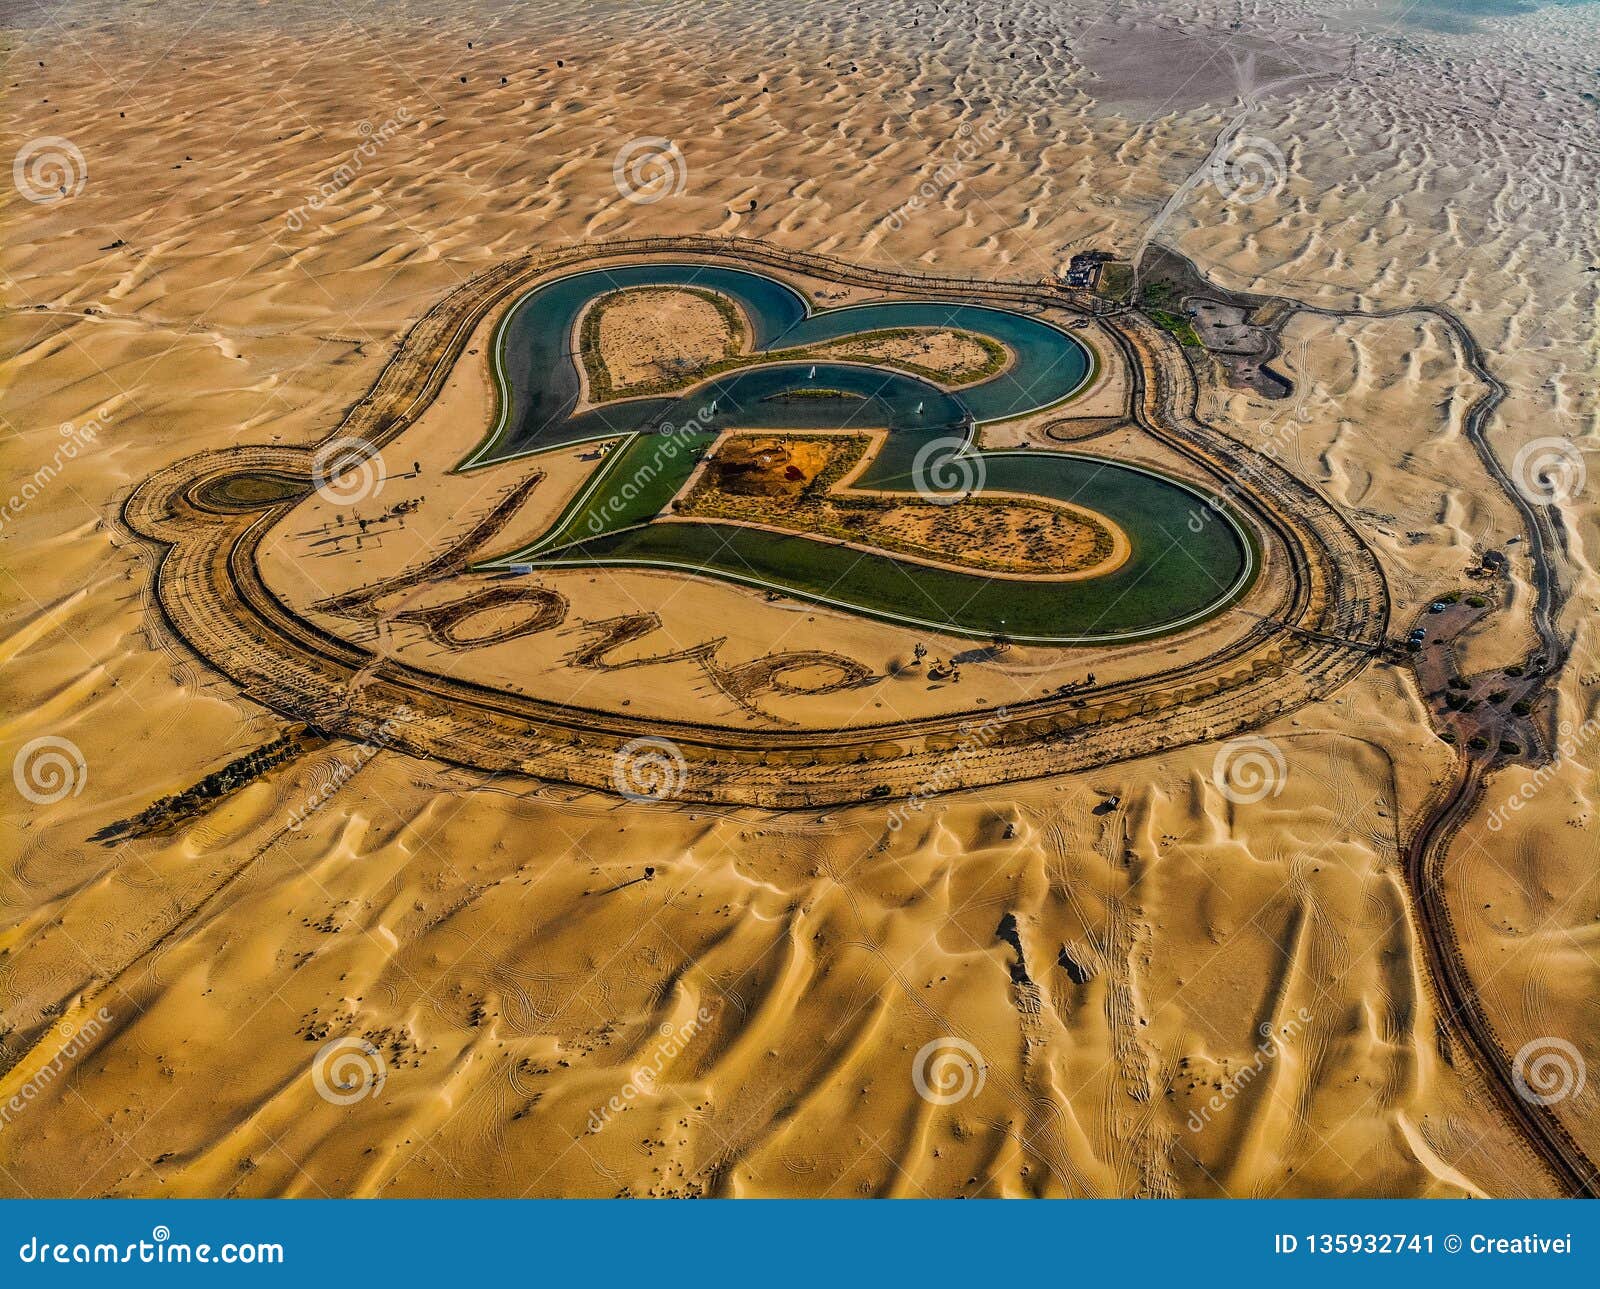 aerial view of entire love lake dubai at al qudra